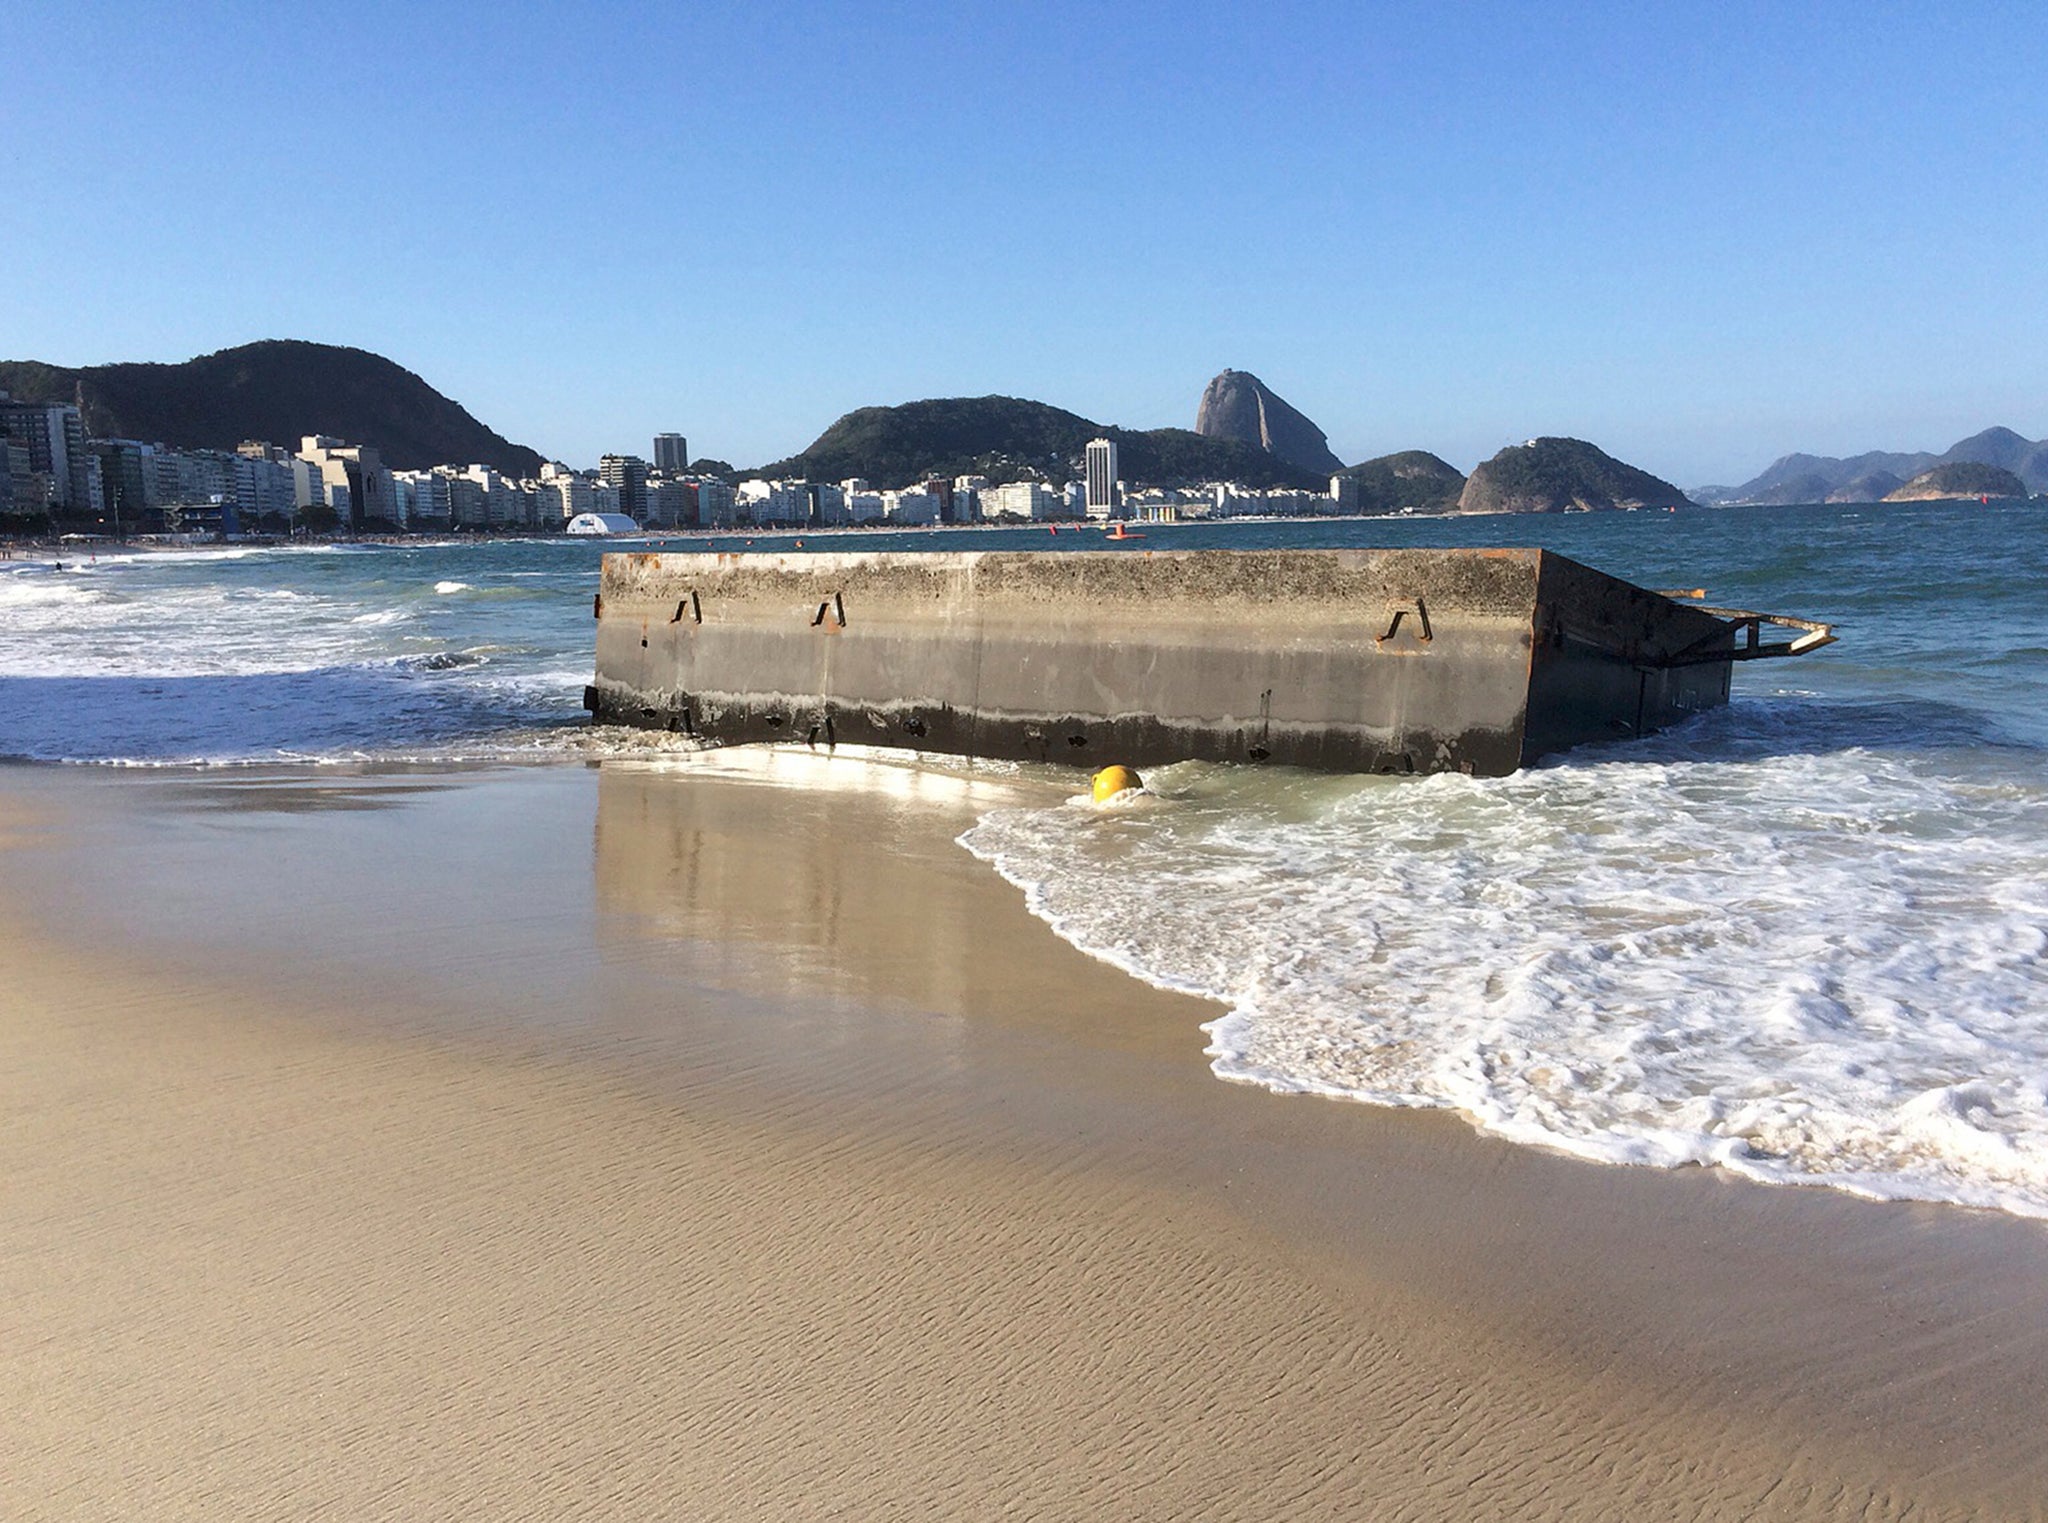 &#13;
The remains of the starting platform pontoon on Copacabana beach &#13;